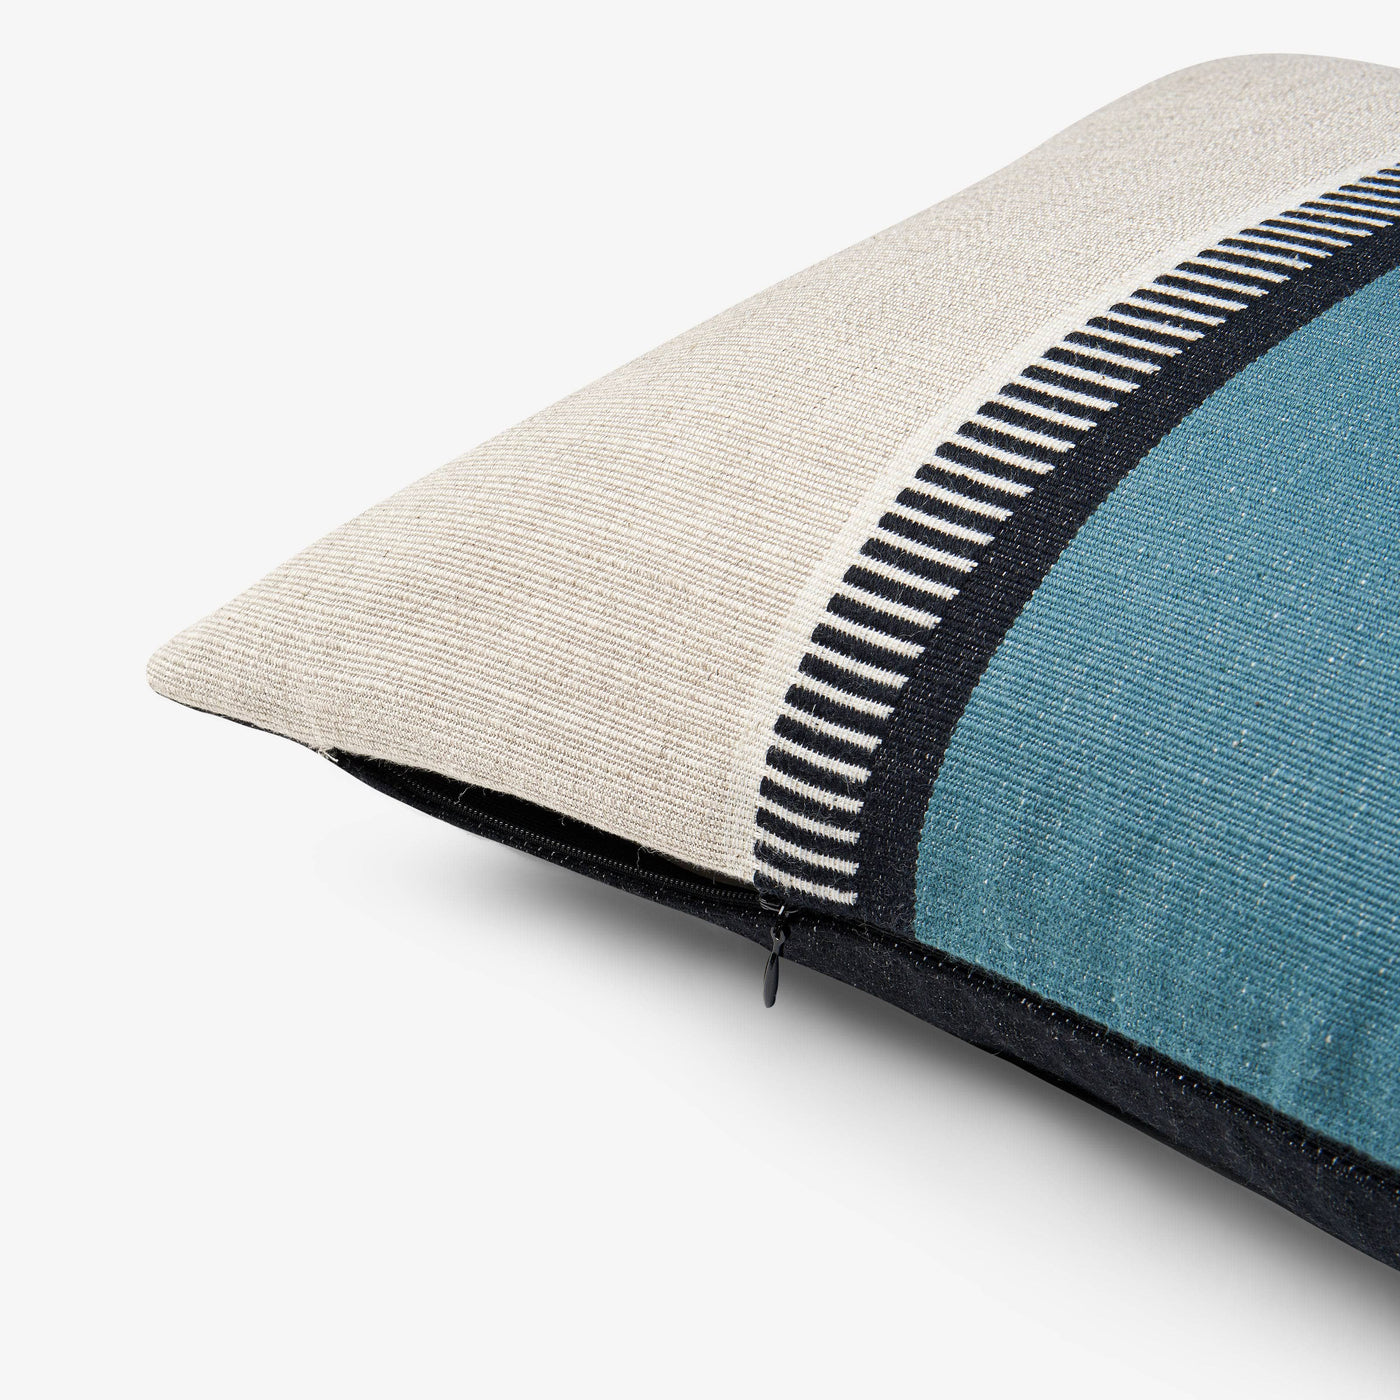 Dumnoni Cushion Cover, Dark Green - Beige, 35x55 cm Cushion Covers sazy.com